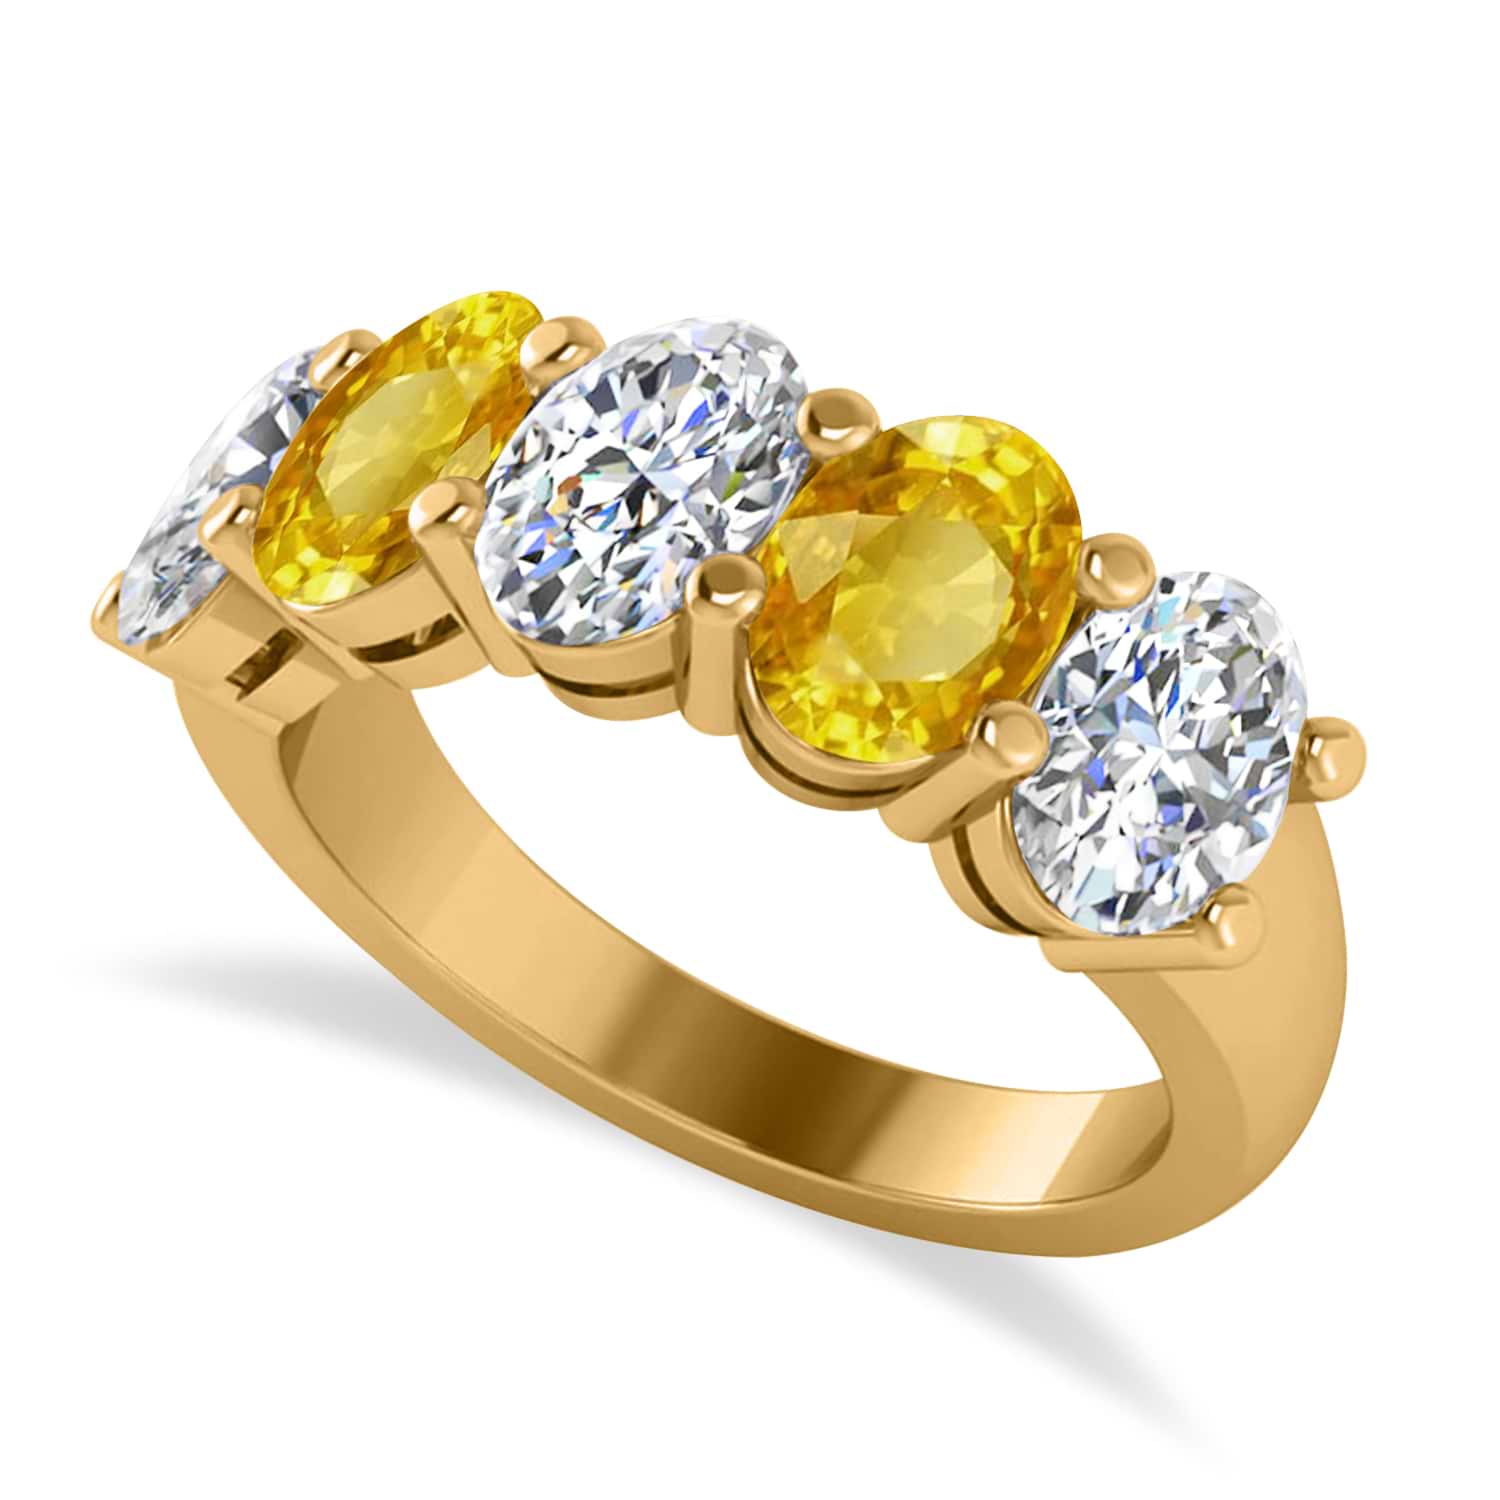 Oval Diamond & Yellow Sapphire Five Stone Ring 14k Yellow Gold (5.00ct)